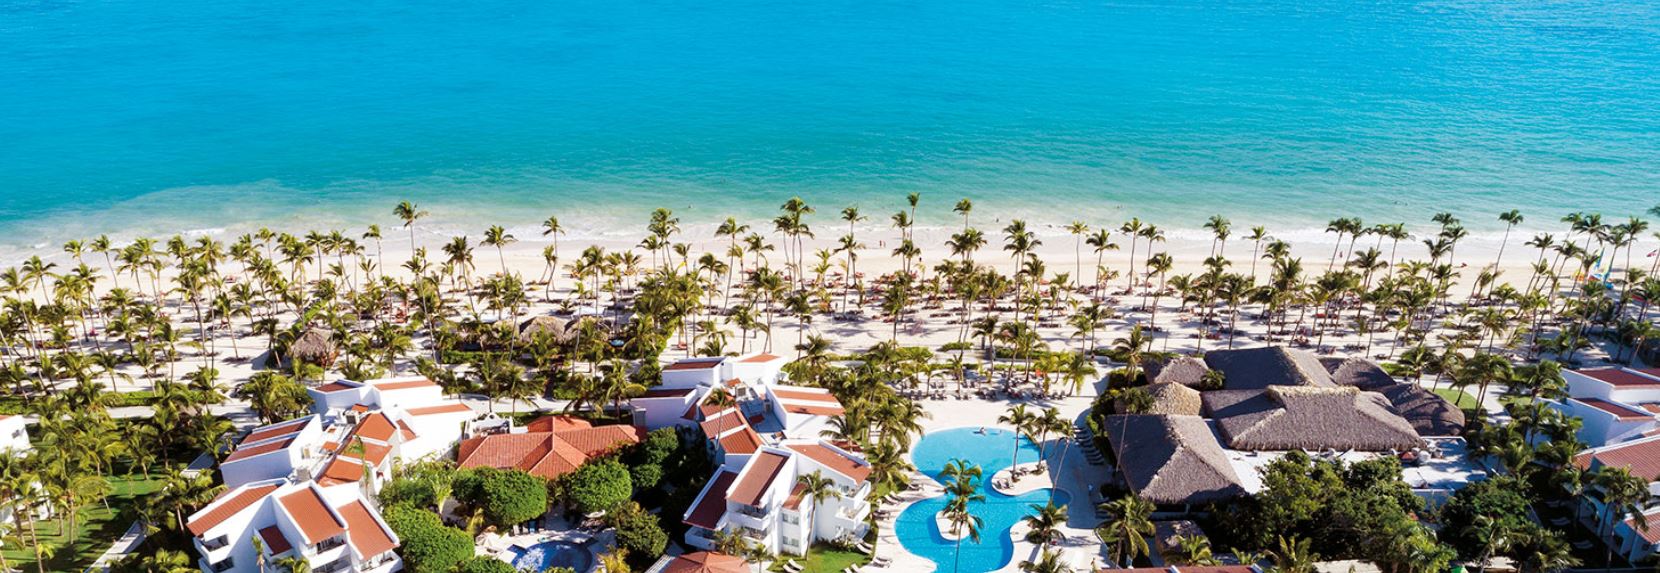 Viaje a Punta Cana fin de año Hotel Occidental Punta Cana